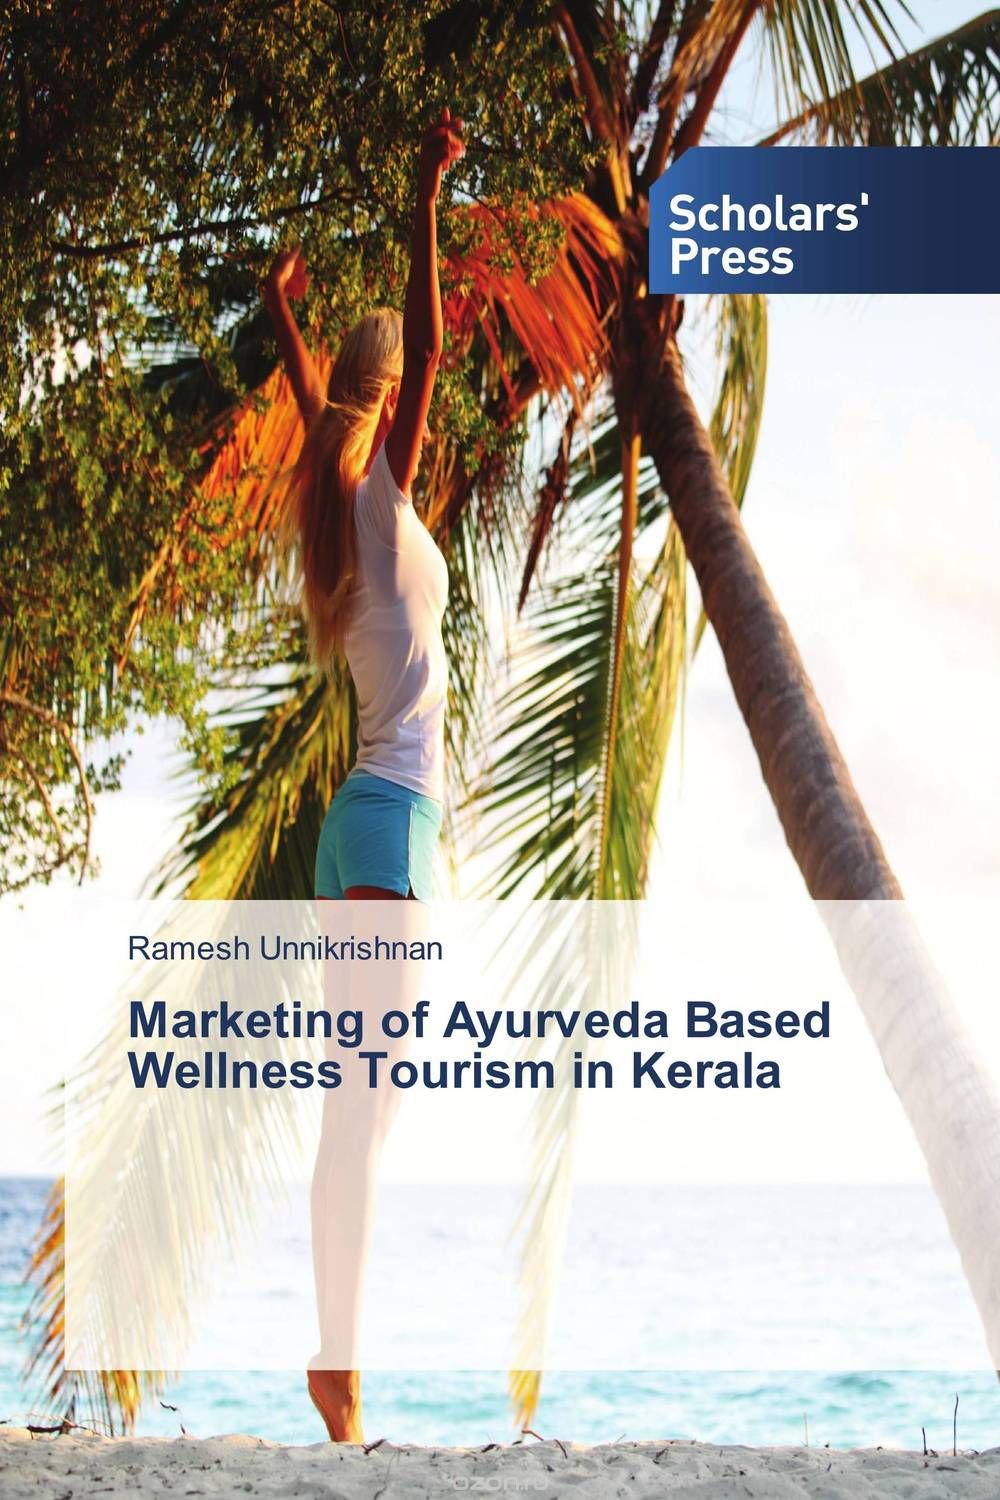 Скачать книгу "Marketing of Ayurveda Based Wellness Tourism in Kerala"